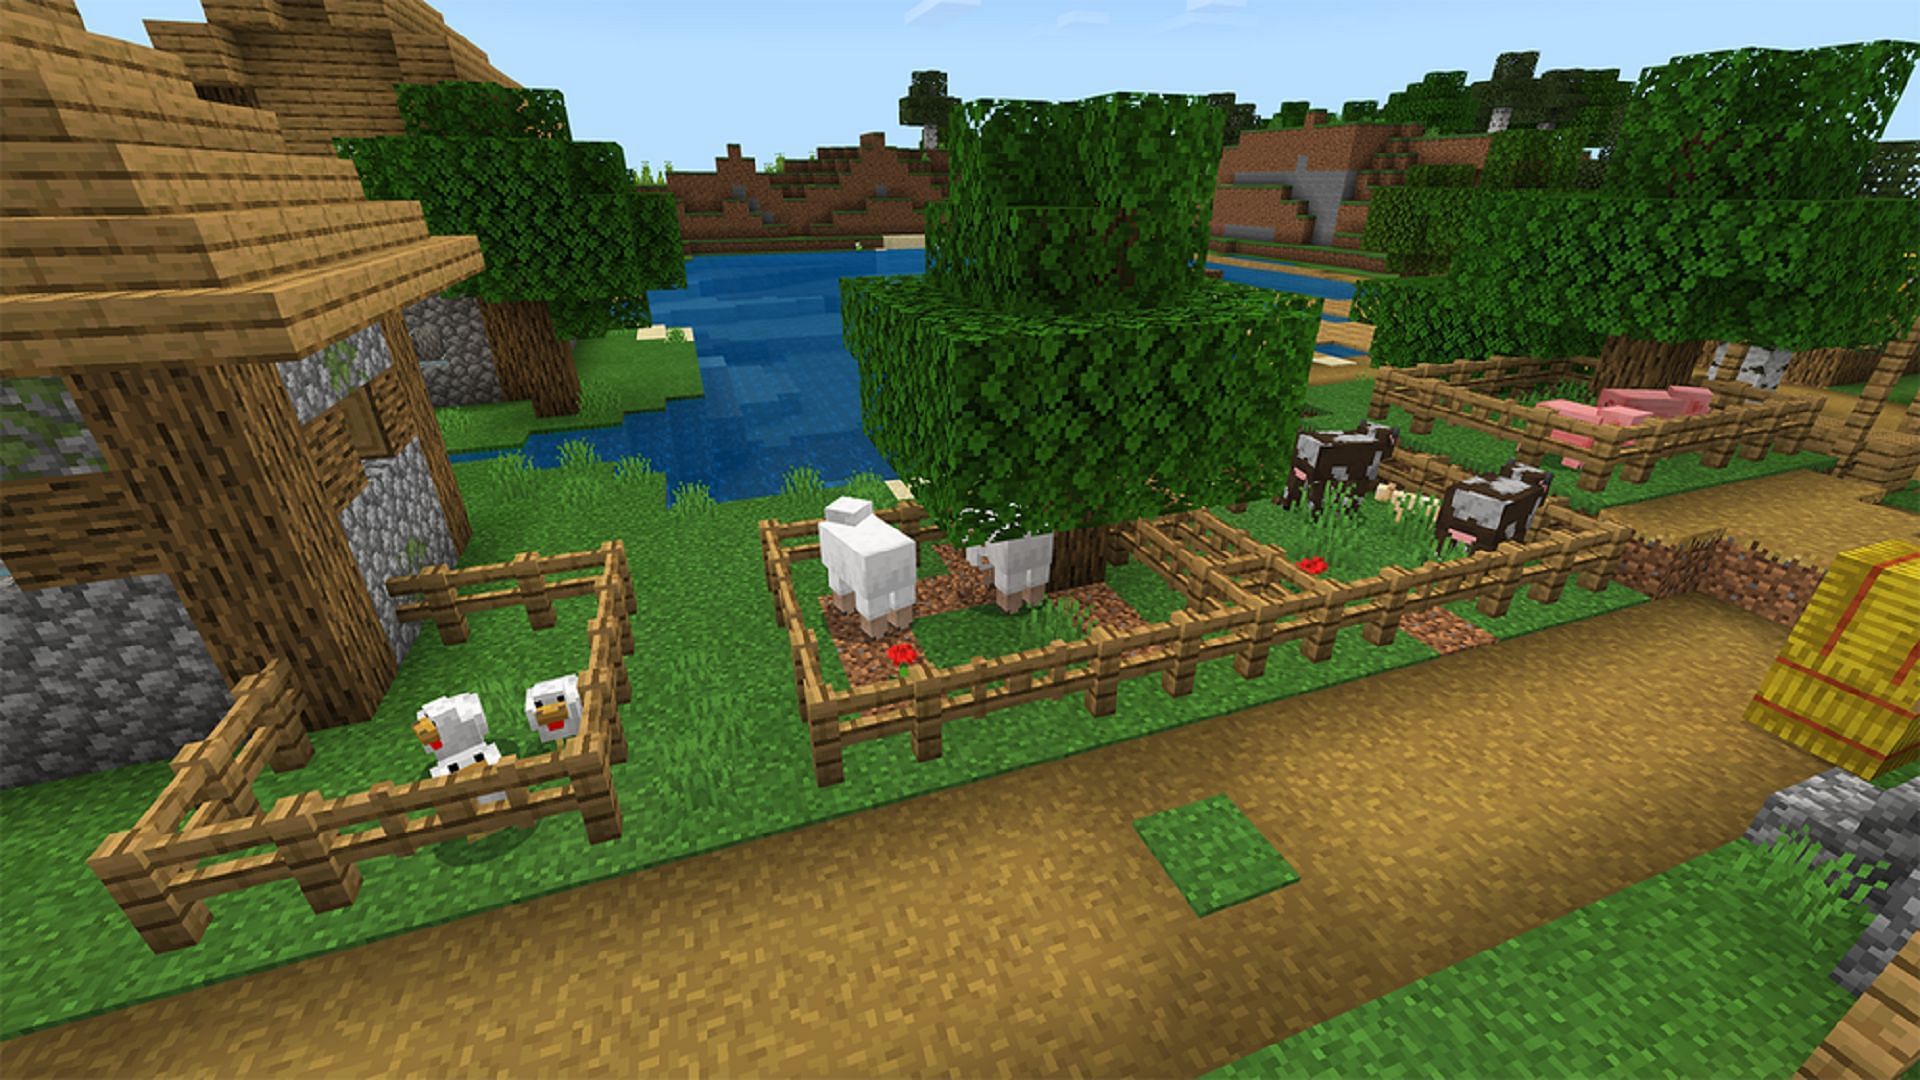 Minecraft animals kept in small farm enclosures (Image via Mojang)